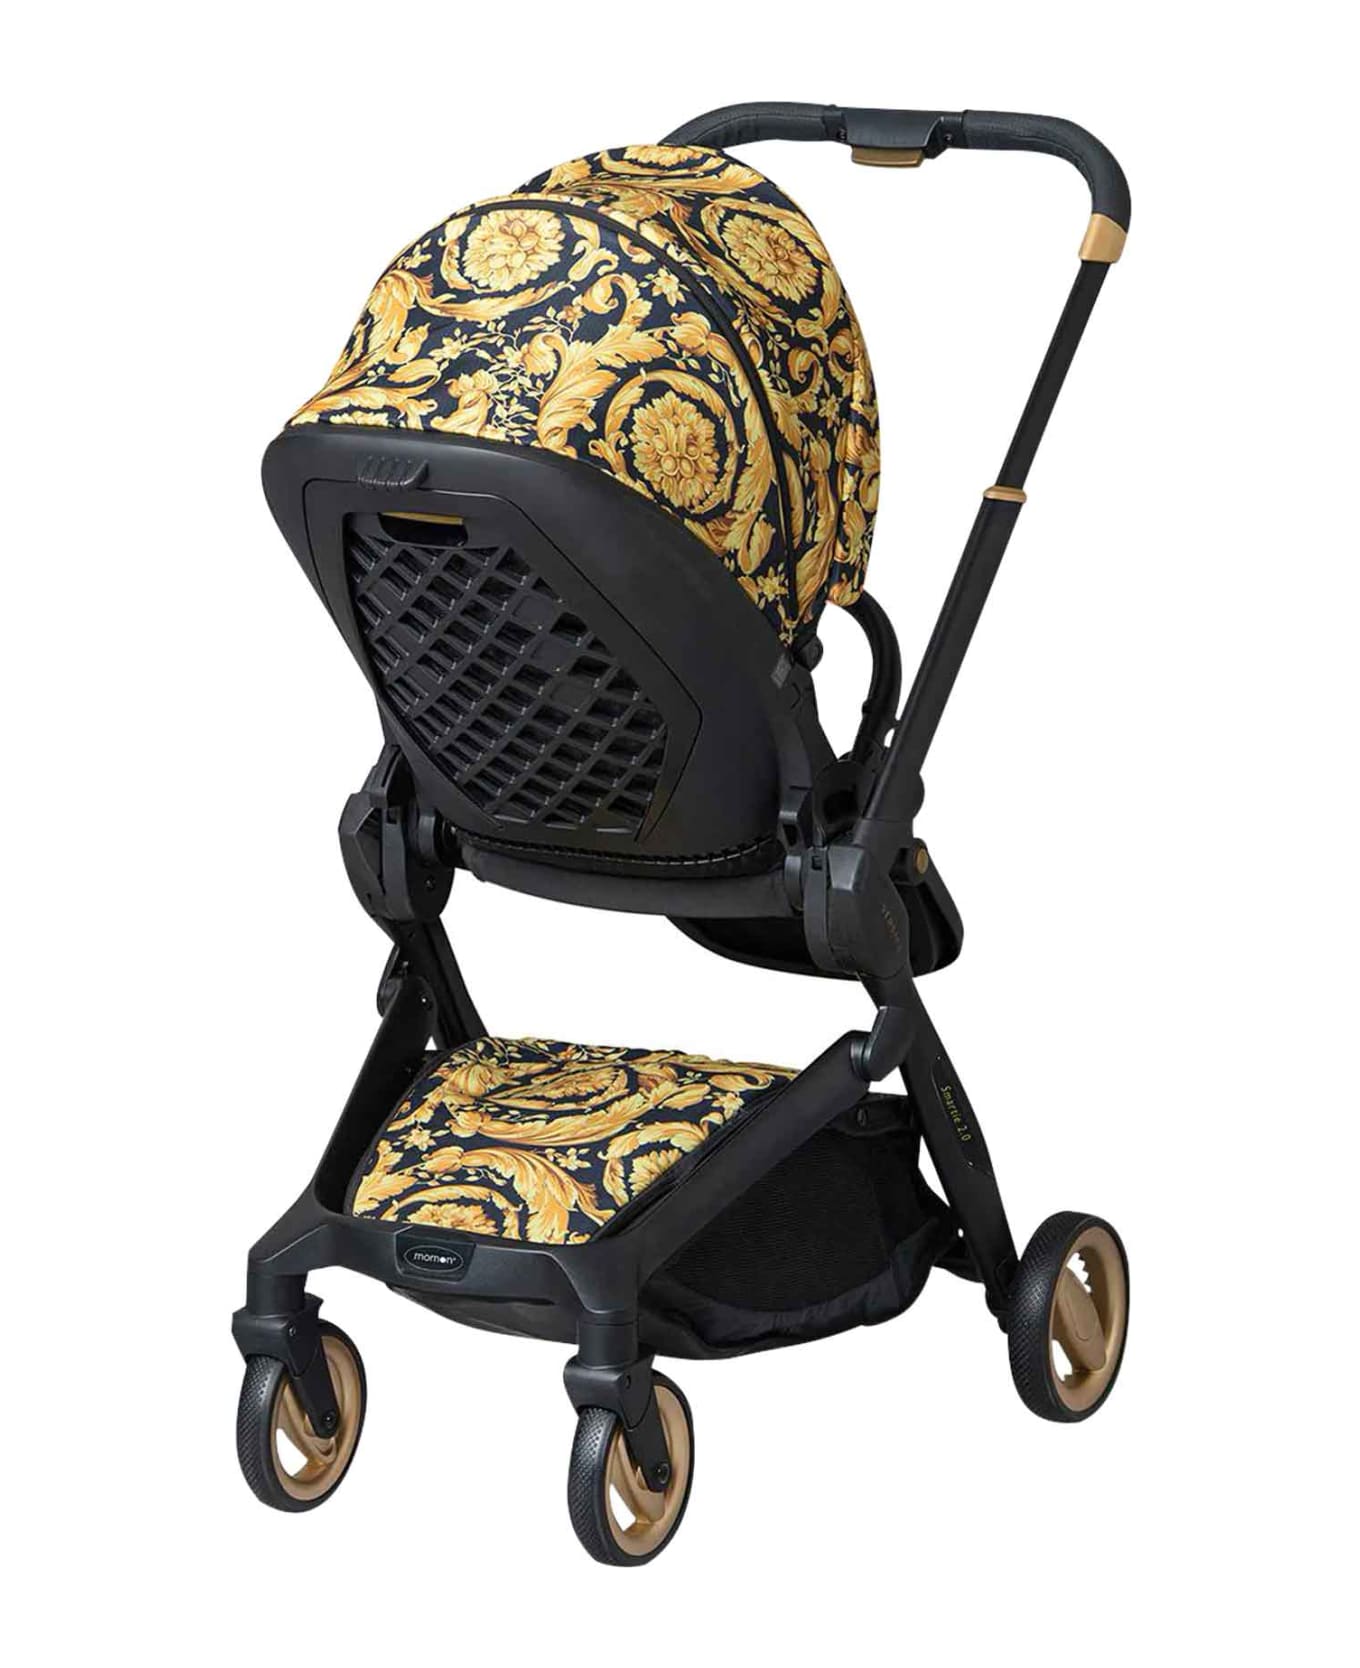 Versace Stroller With Baroque Print - Nero/oro